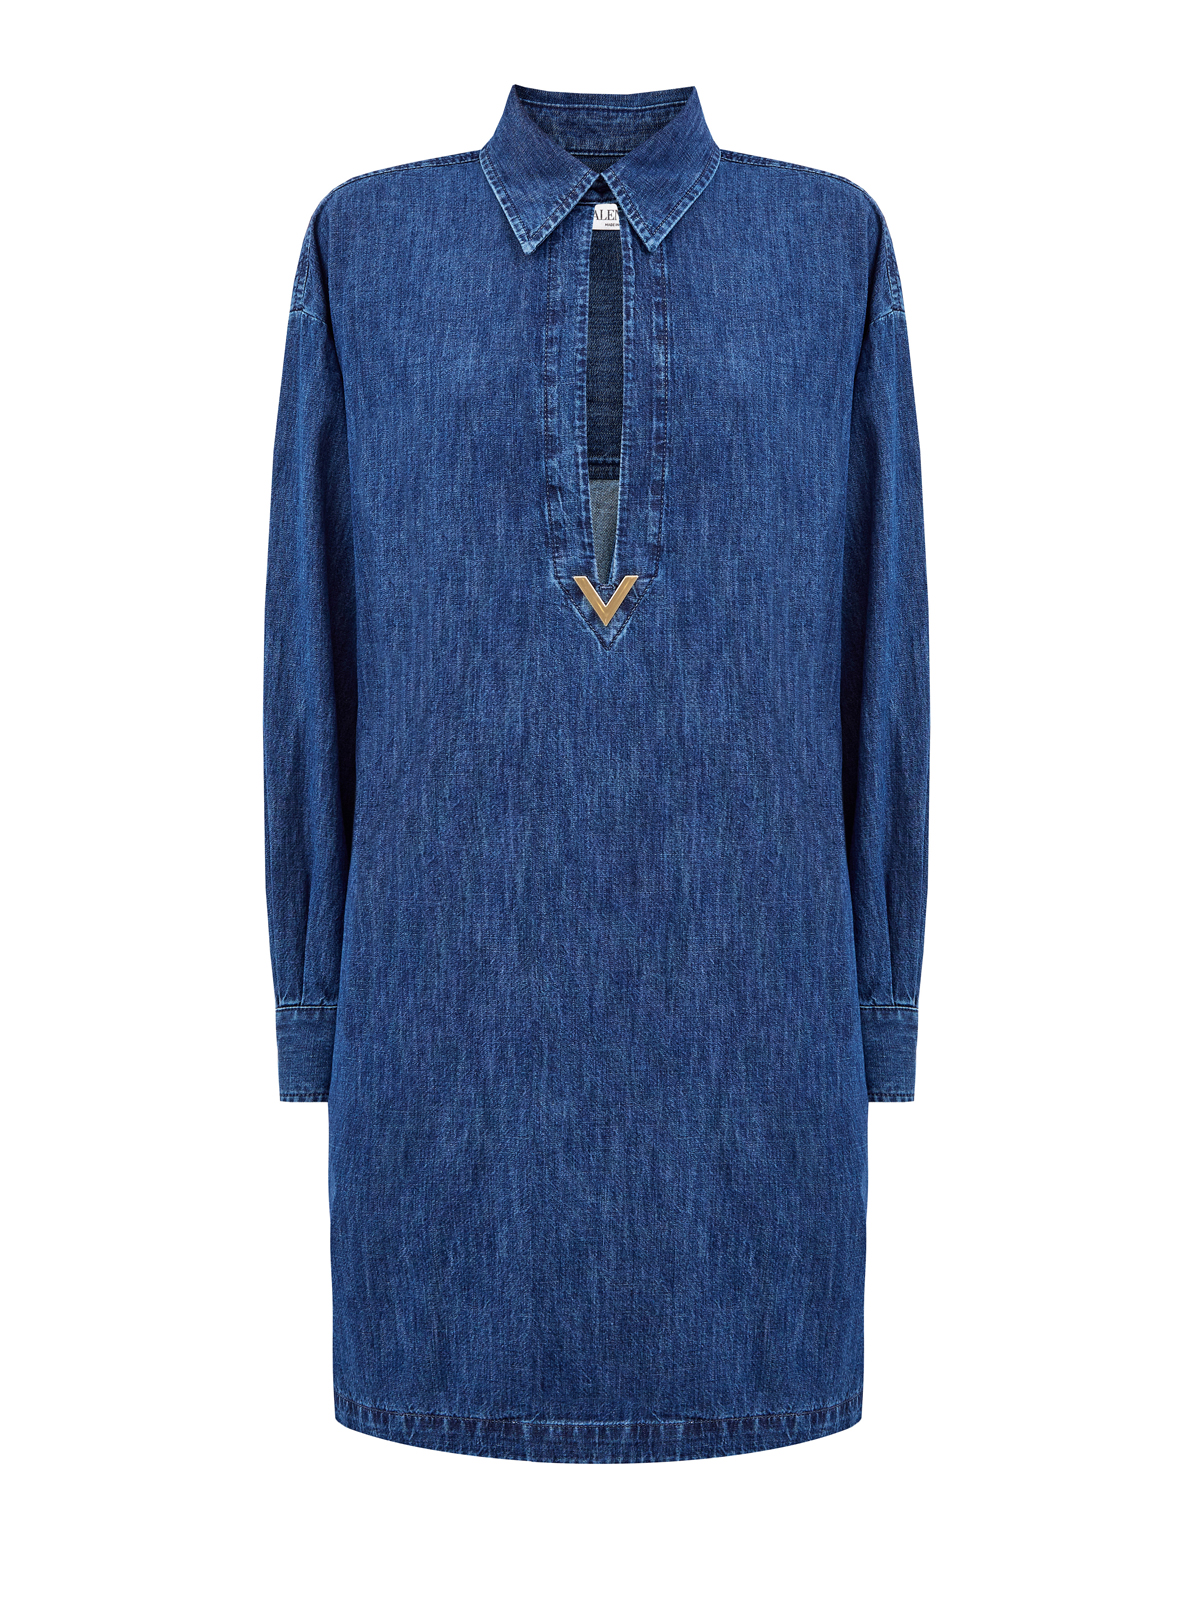 Платье-рубашка из ткани шамбре с литым логотипом VGOLD VALENTINO синего цвета